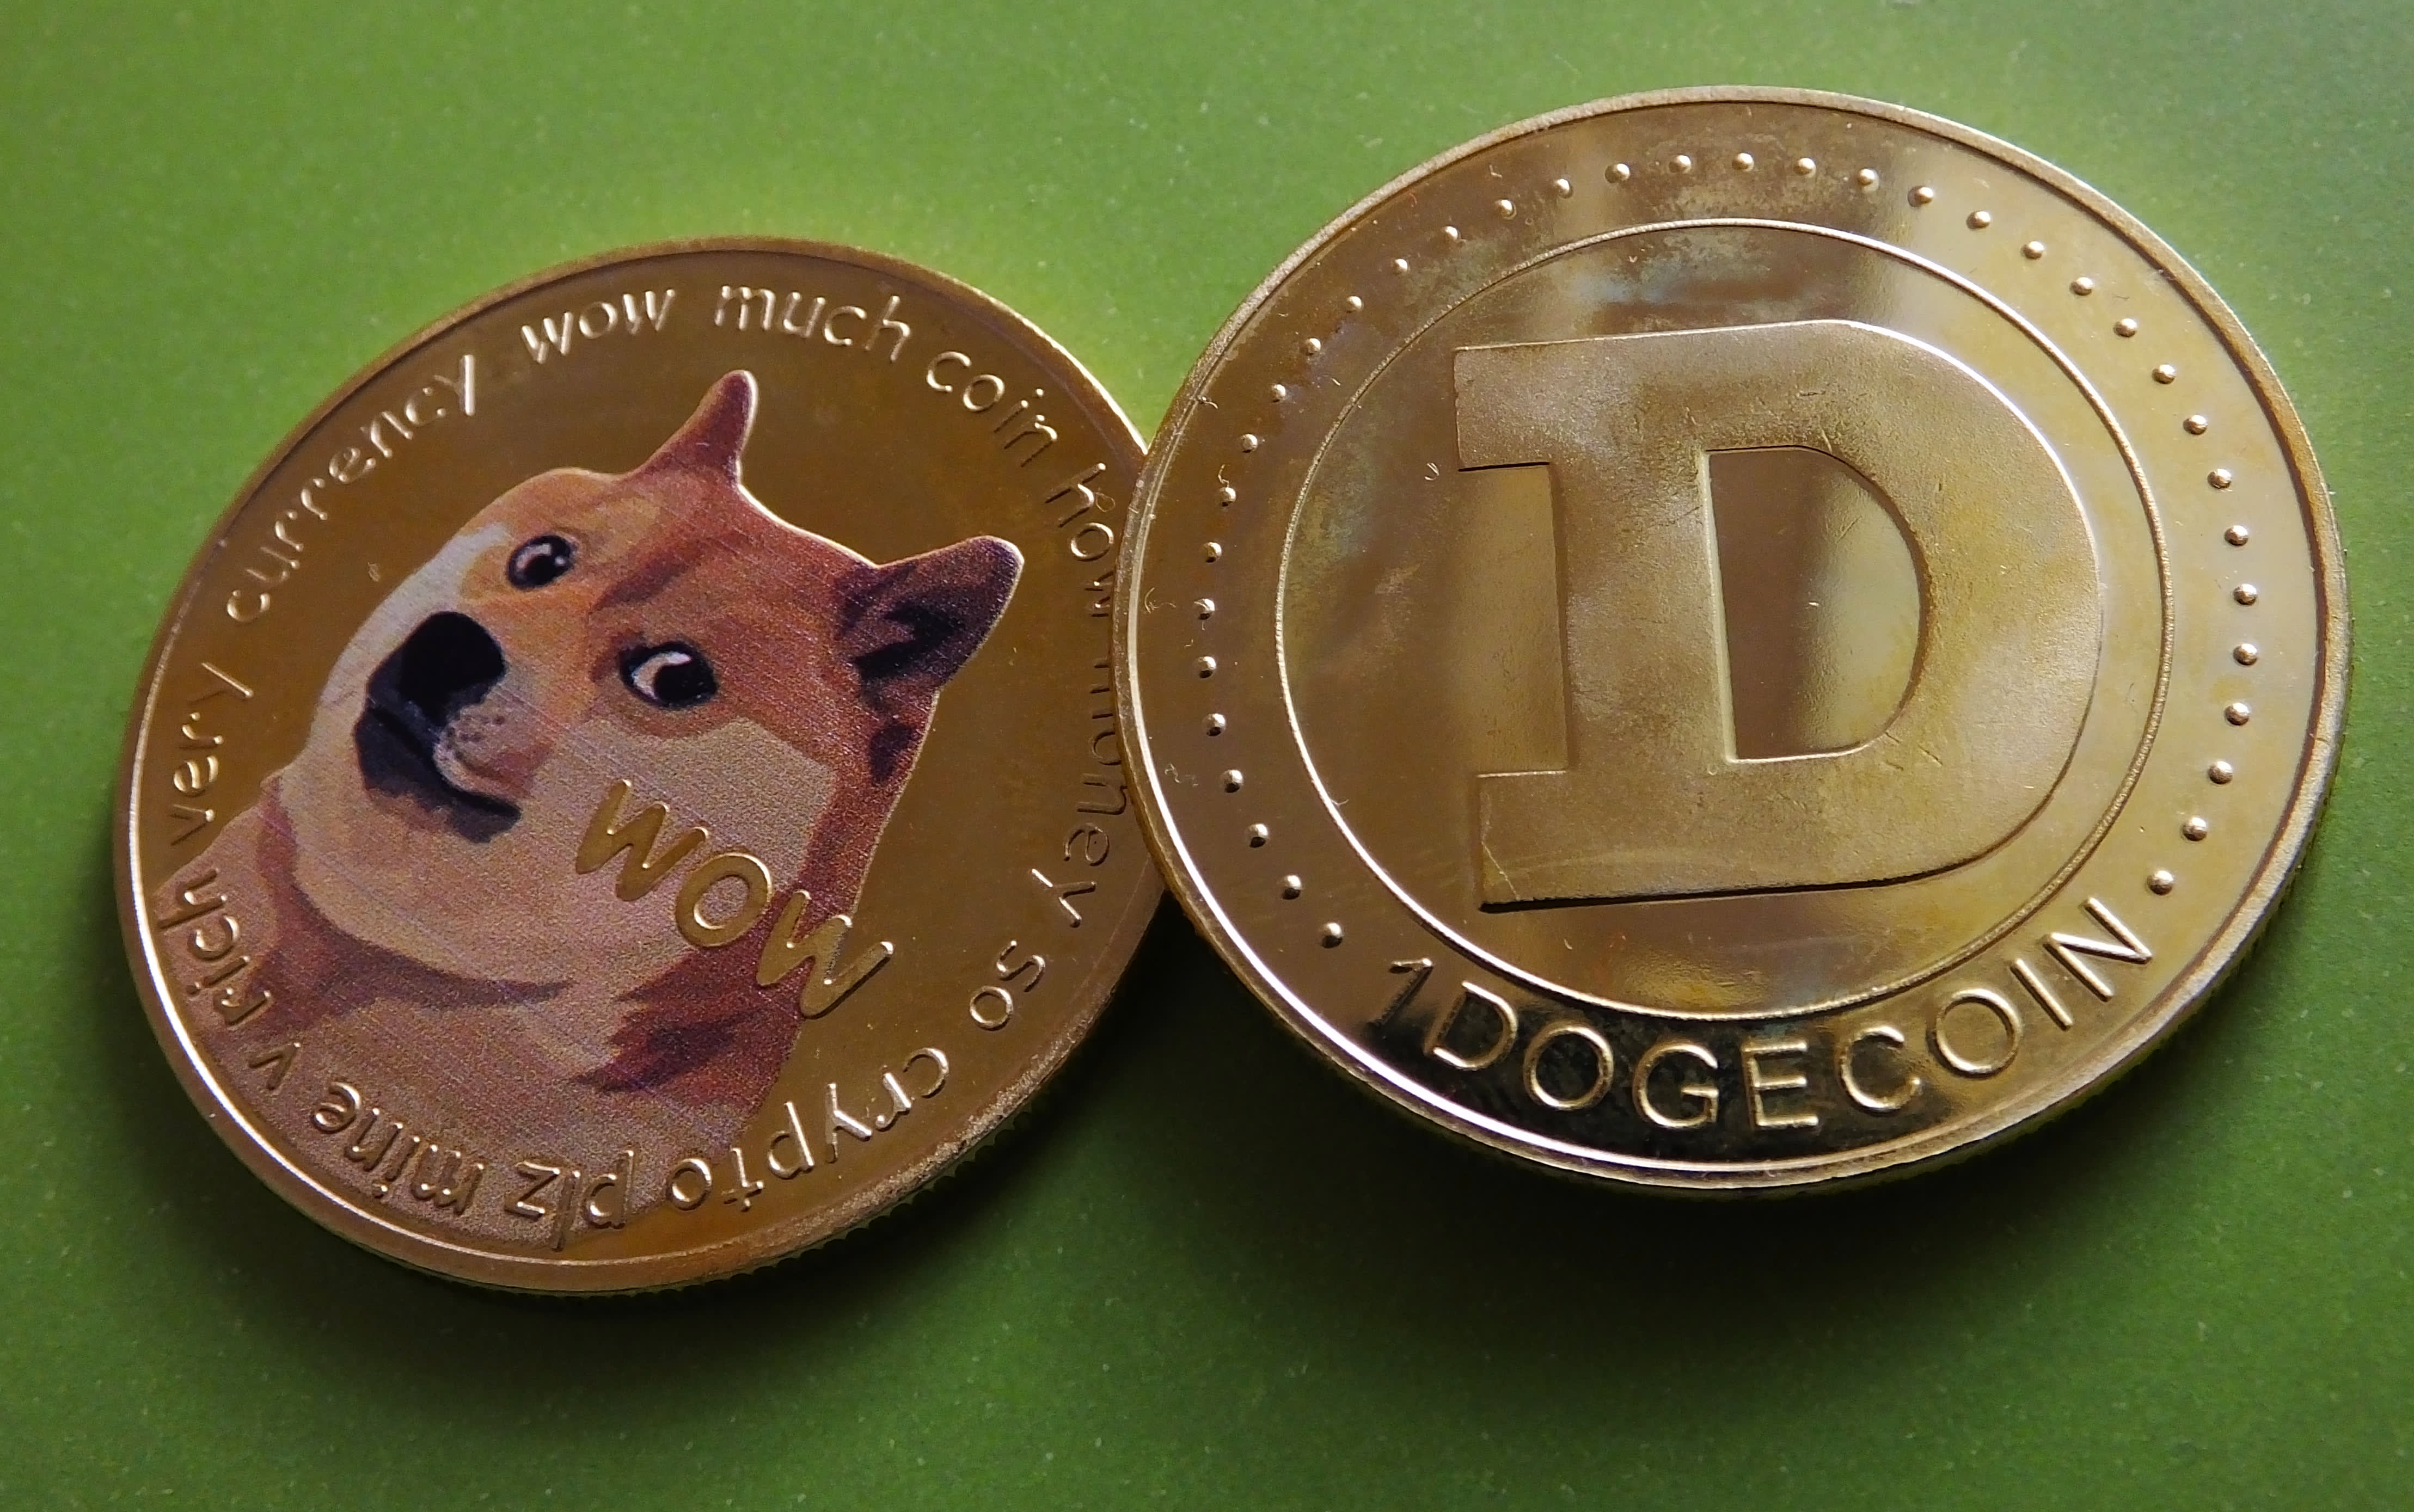 Dogecoin vs. Bitcoin: How Do They Compare?